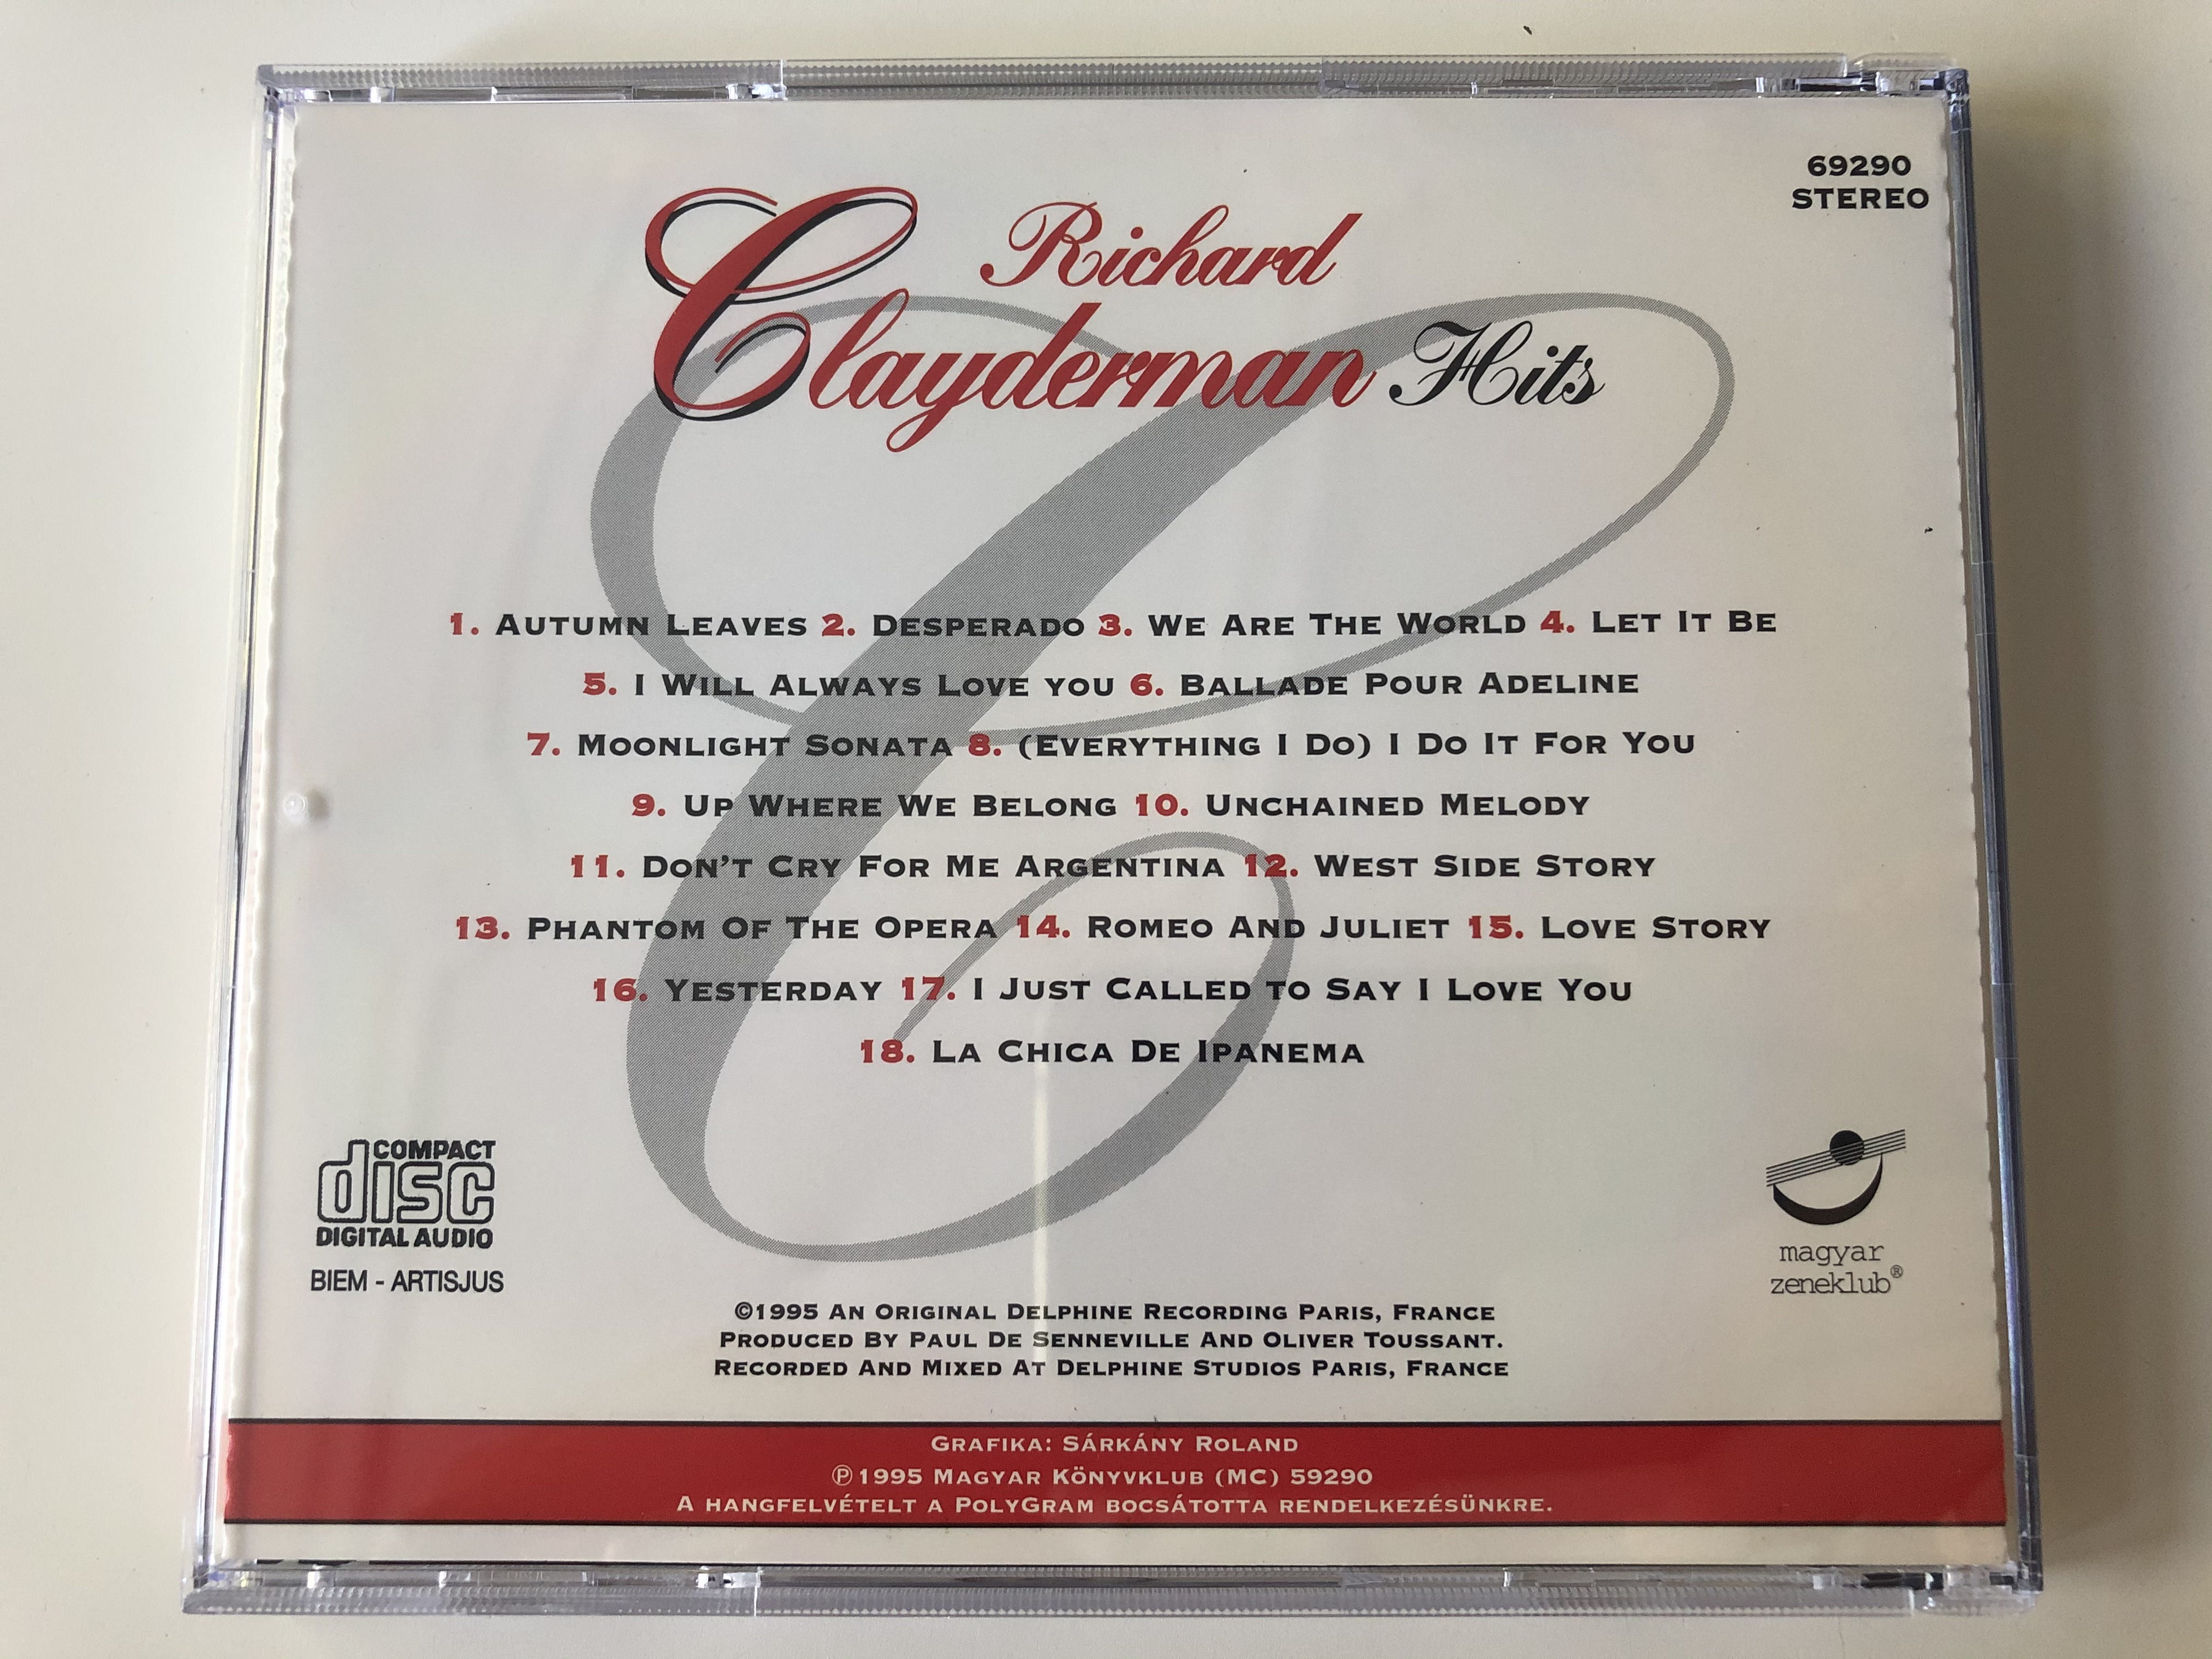 richard-clayderman-hits-exkluziv-valogatas-clayderman-legnepszerubb-felveteleibol-magyar-zeneklub-audio-cd-1995-stereo-69290-4-.jpg